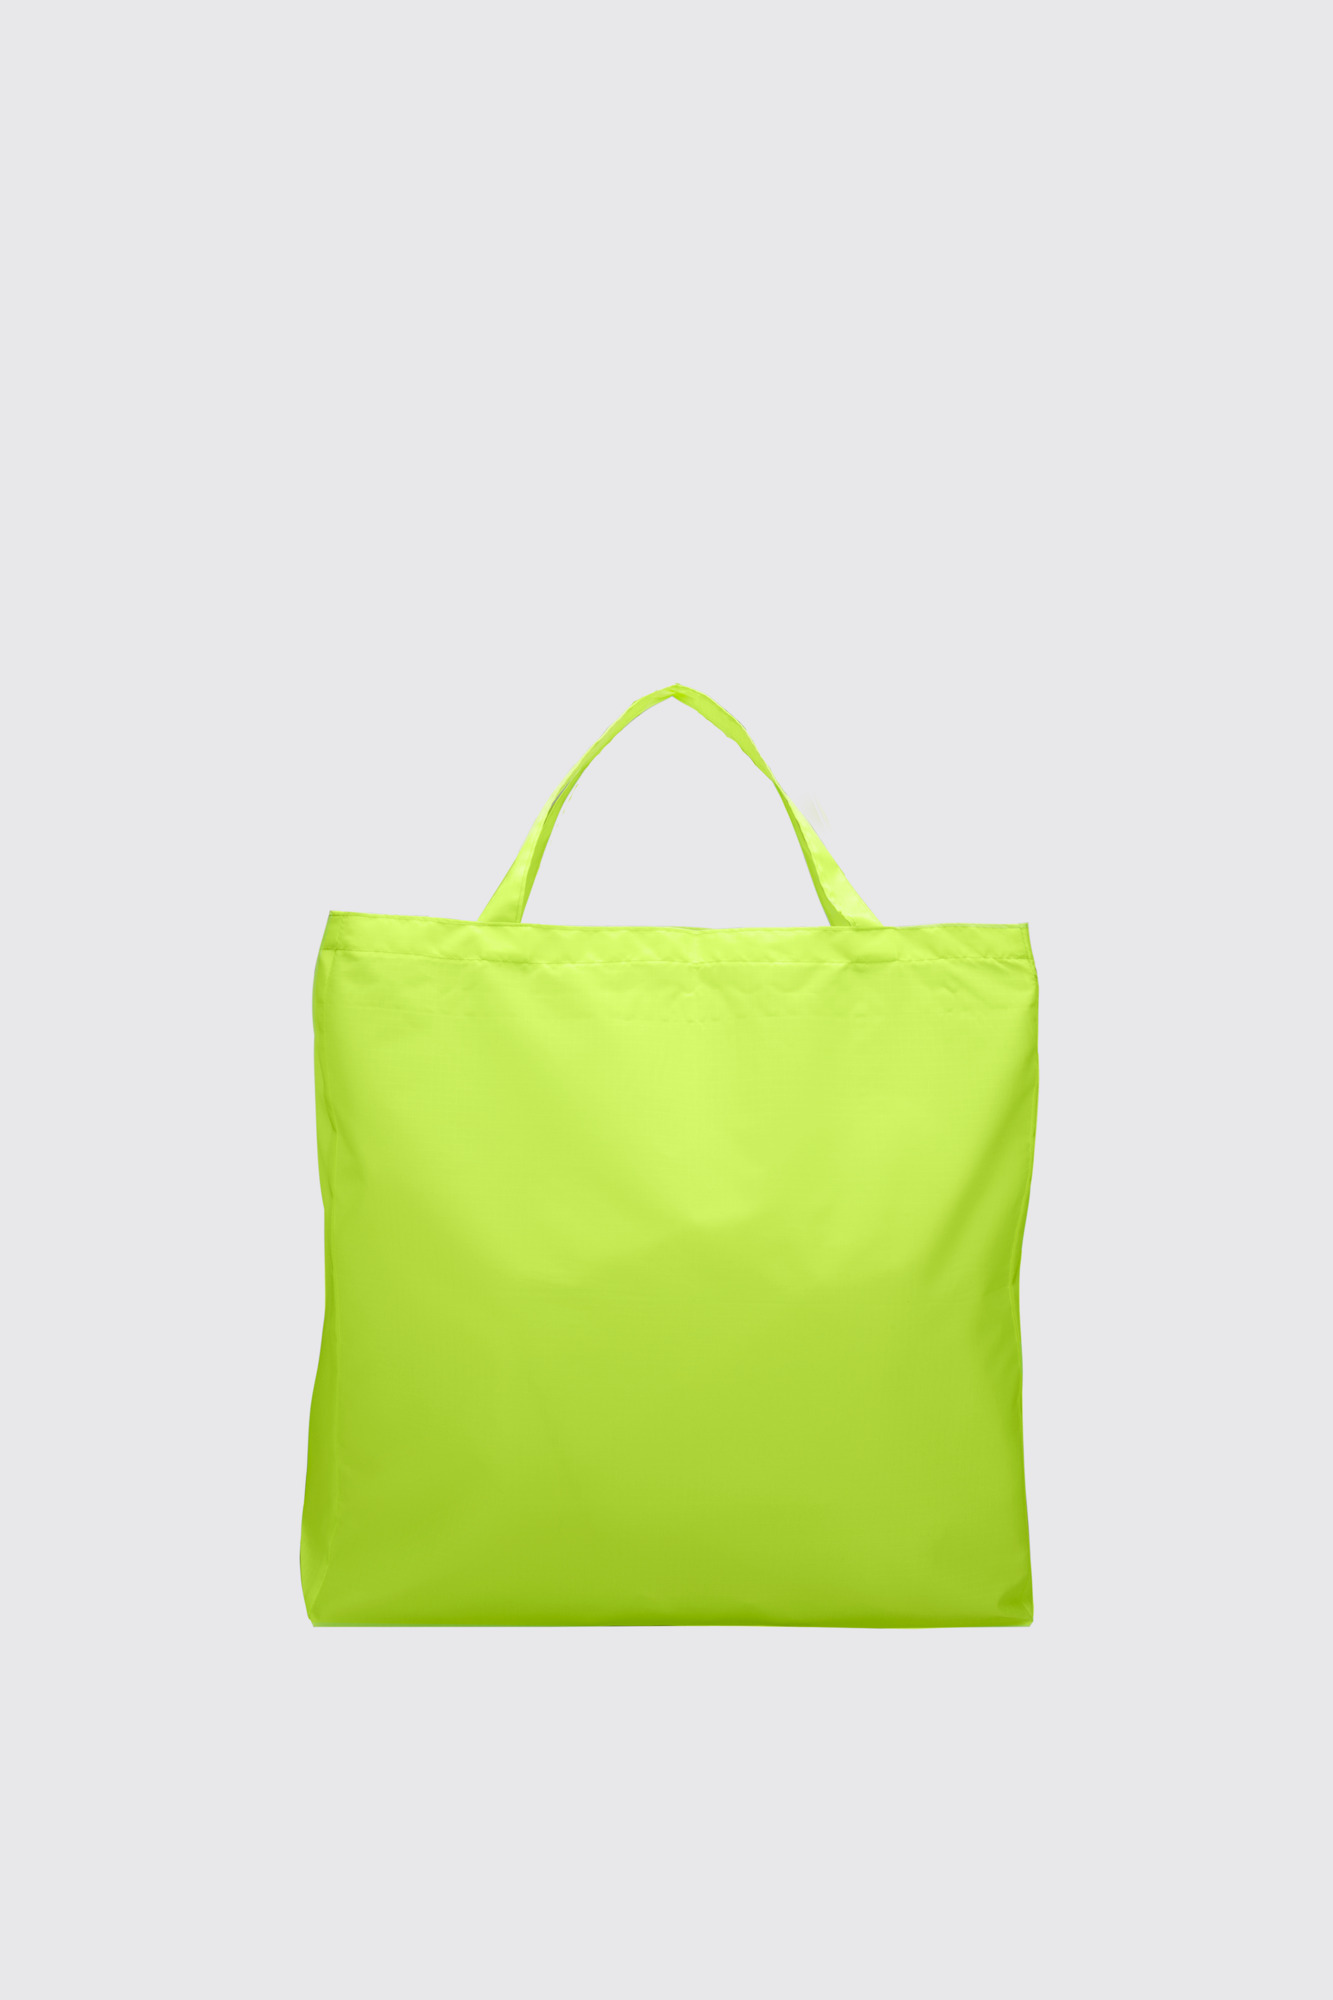 Pink Orange Green & Yellow Neon Star Shopper / Tote Bag. 